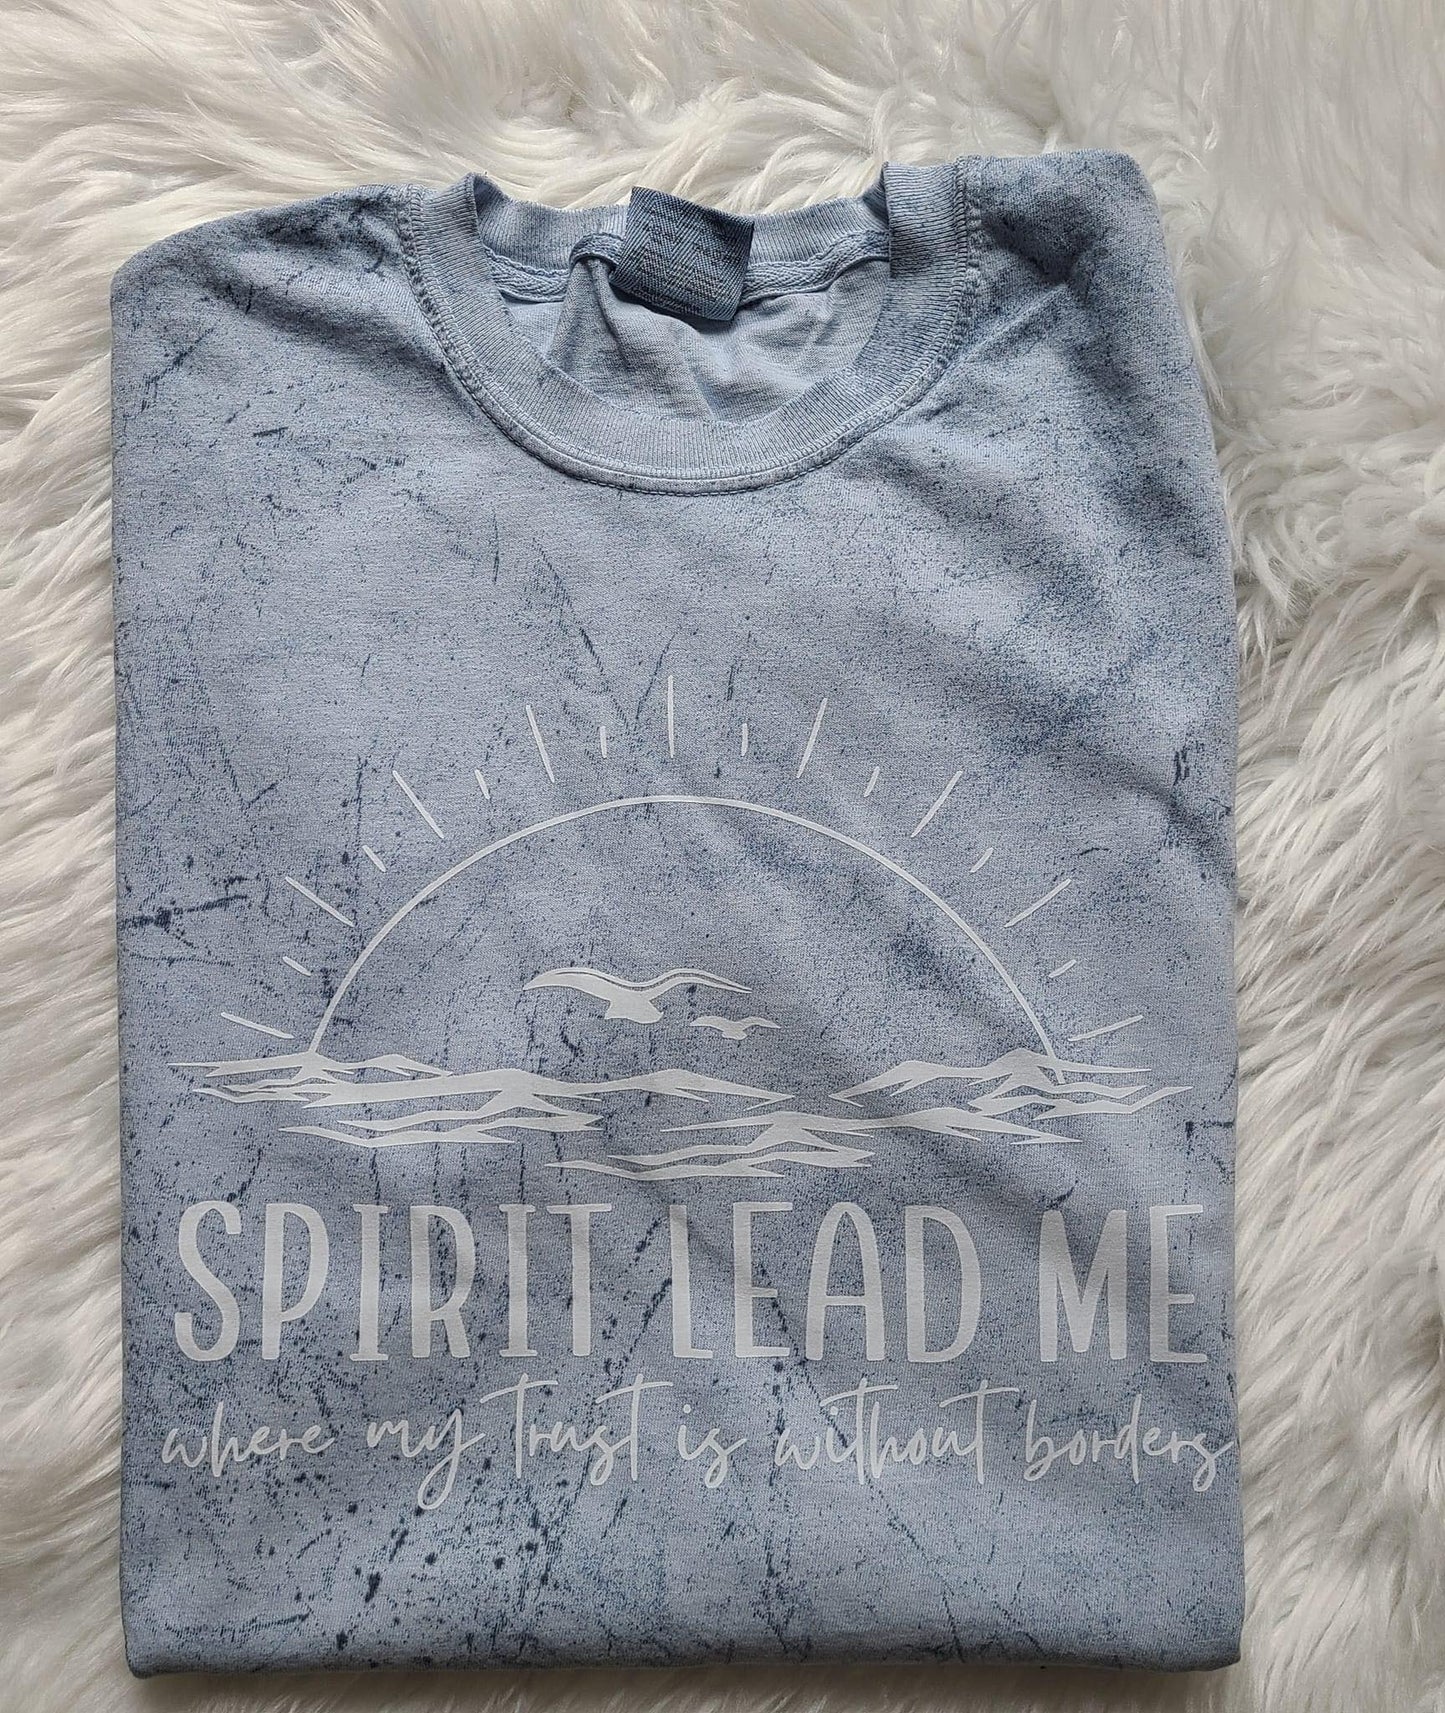 Spirit lead me